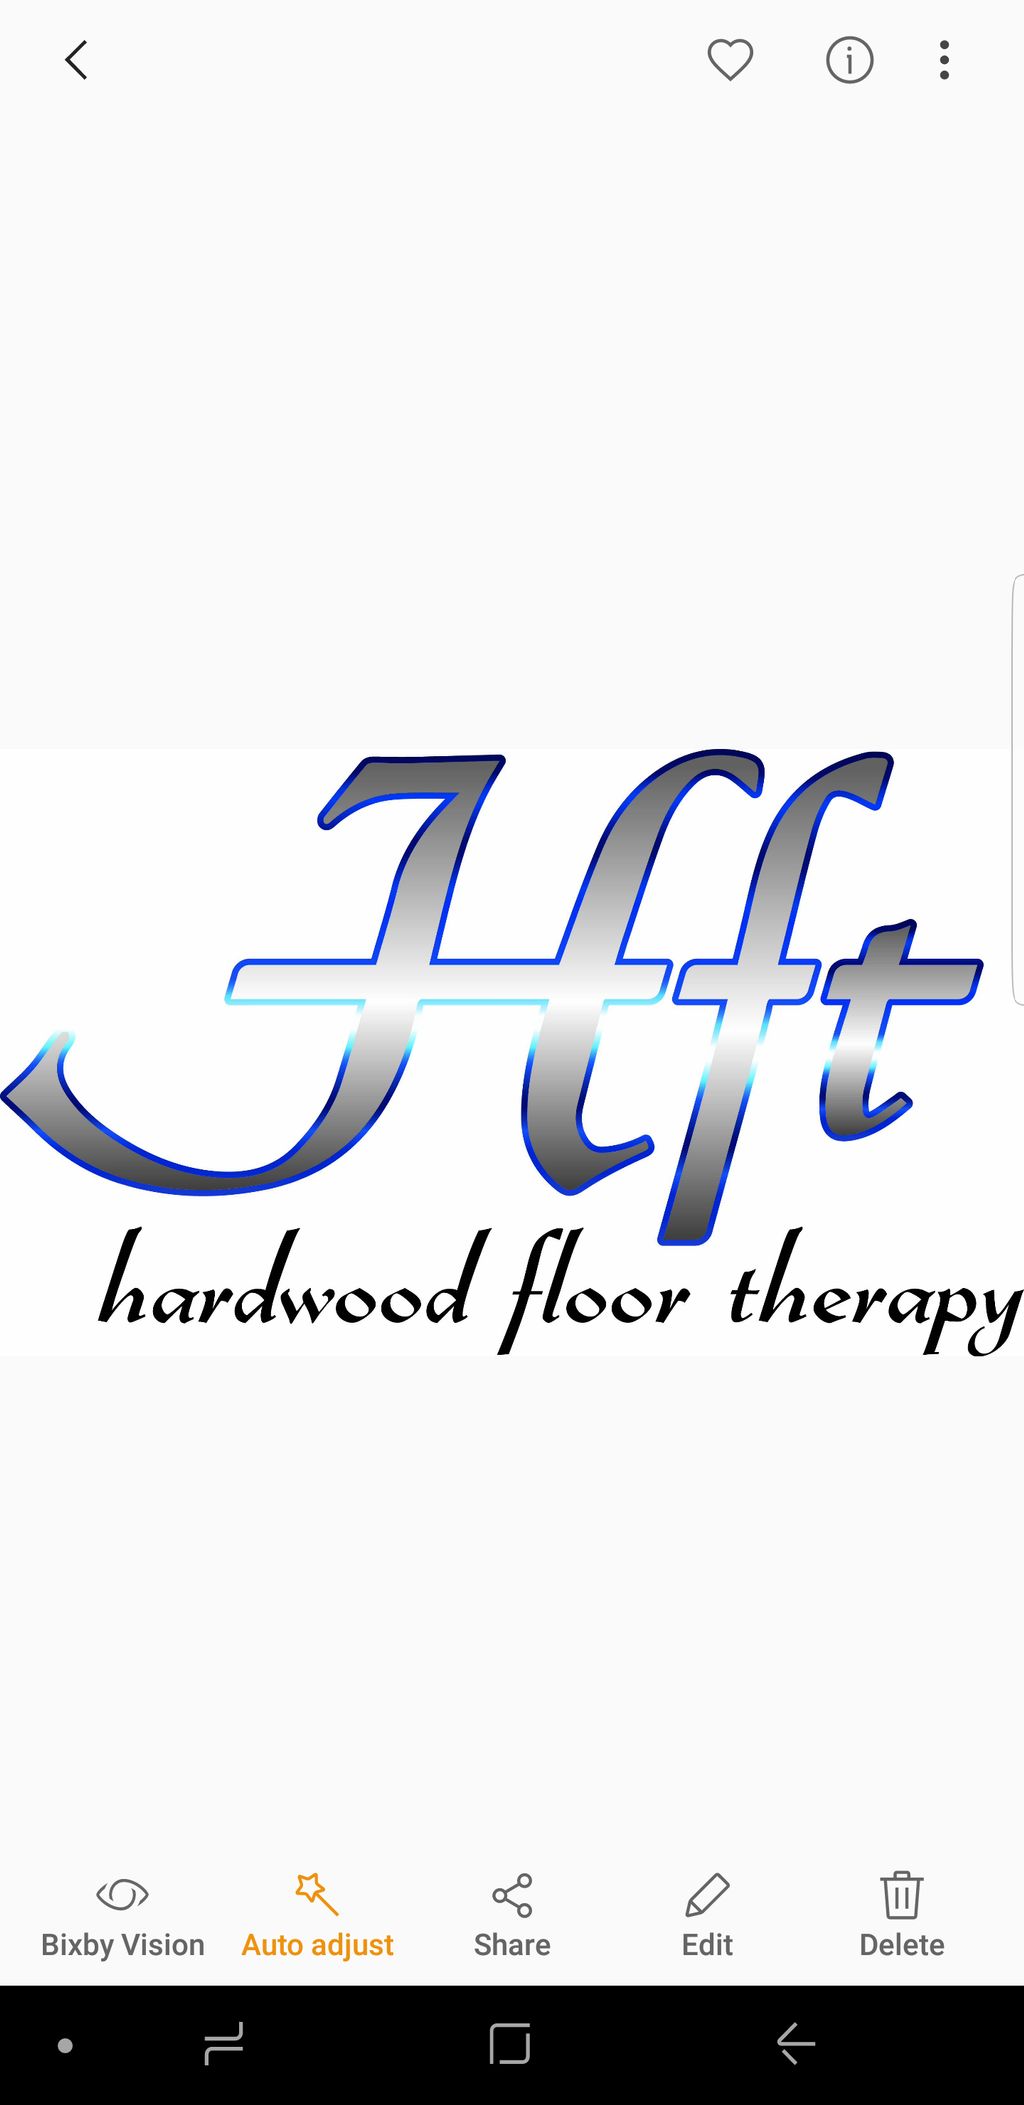 Hardwood Floor Therapy LLC